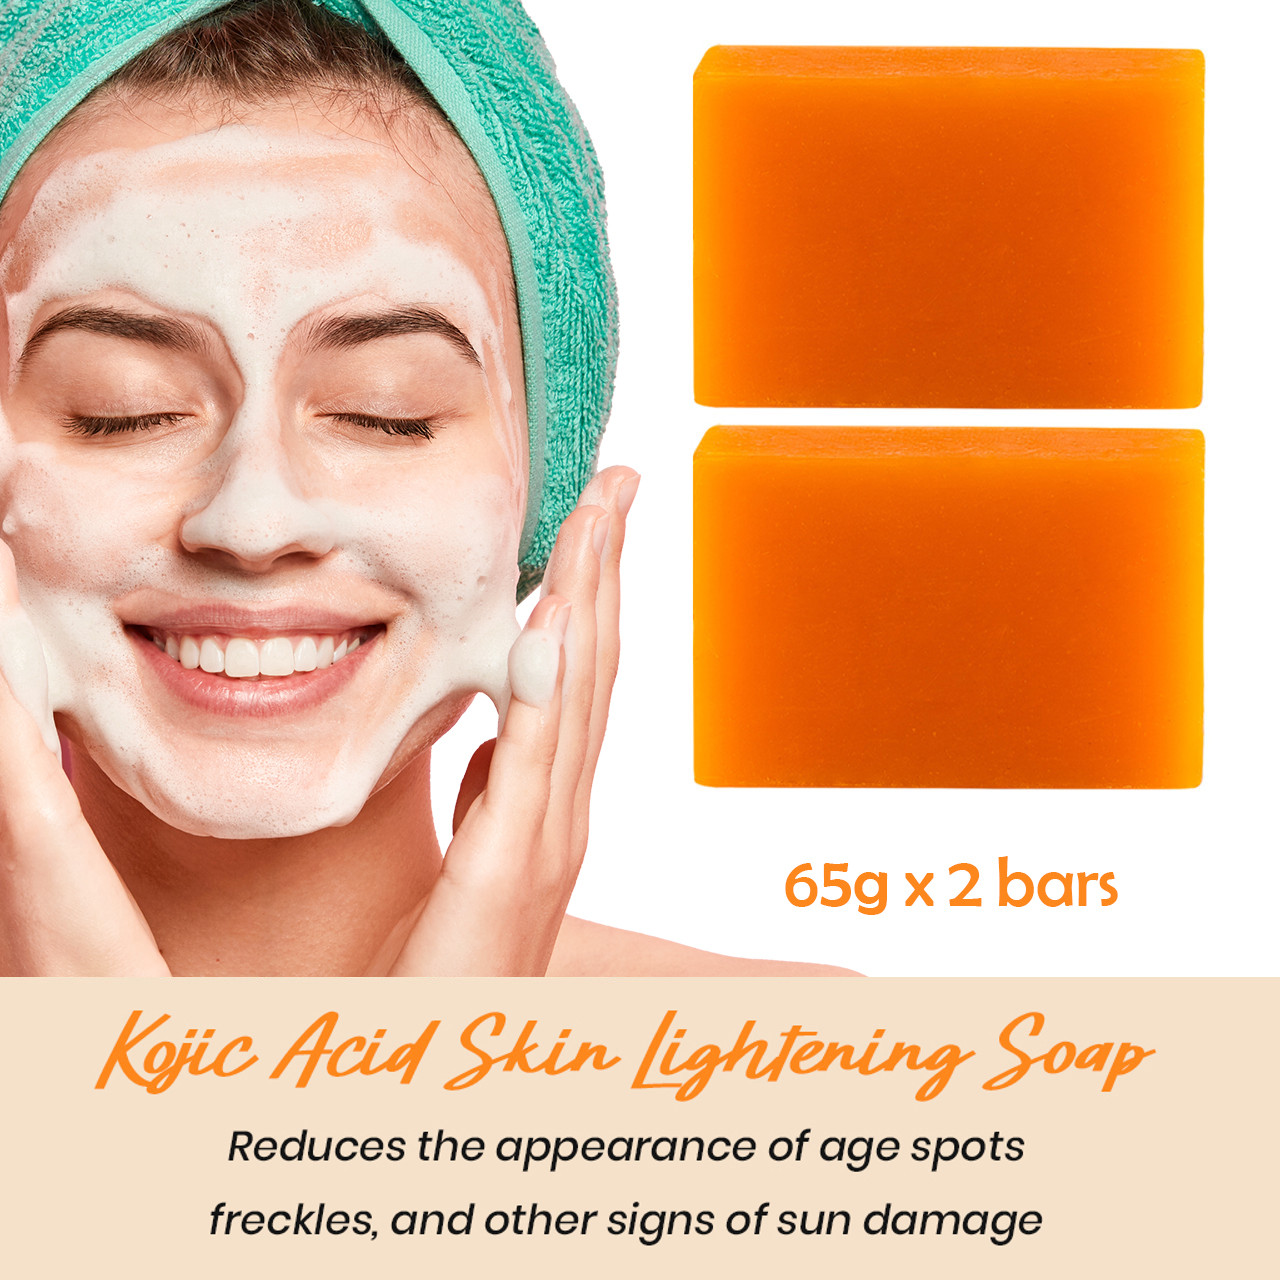 Original guarantee 65g x 3,65g x2 Bars Kojie San Skin Brightening